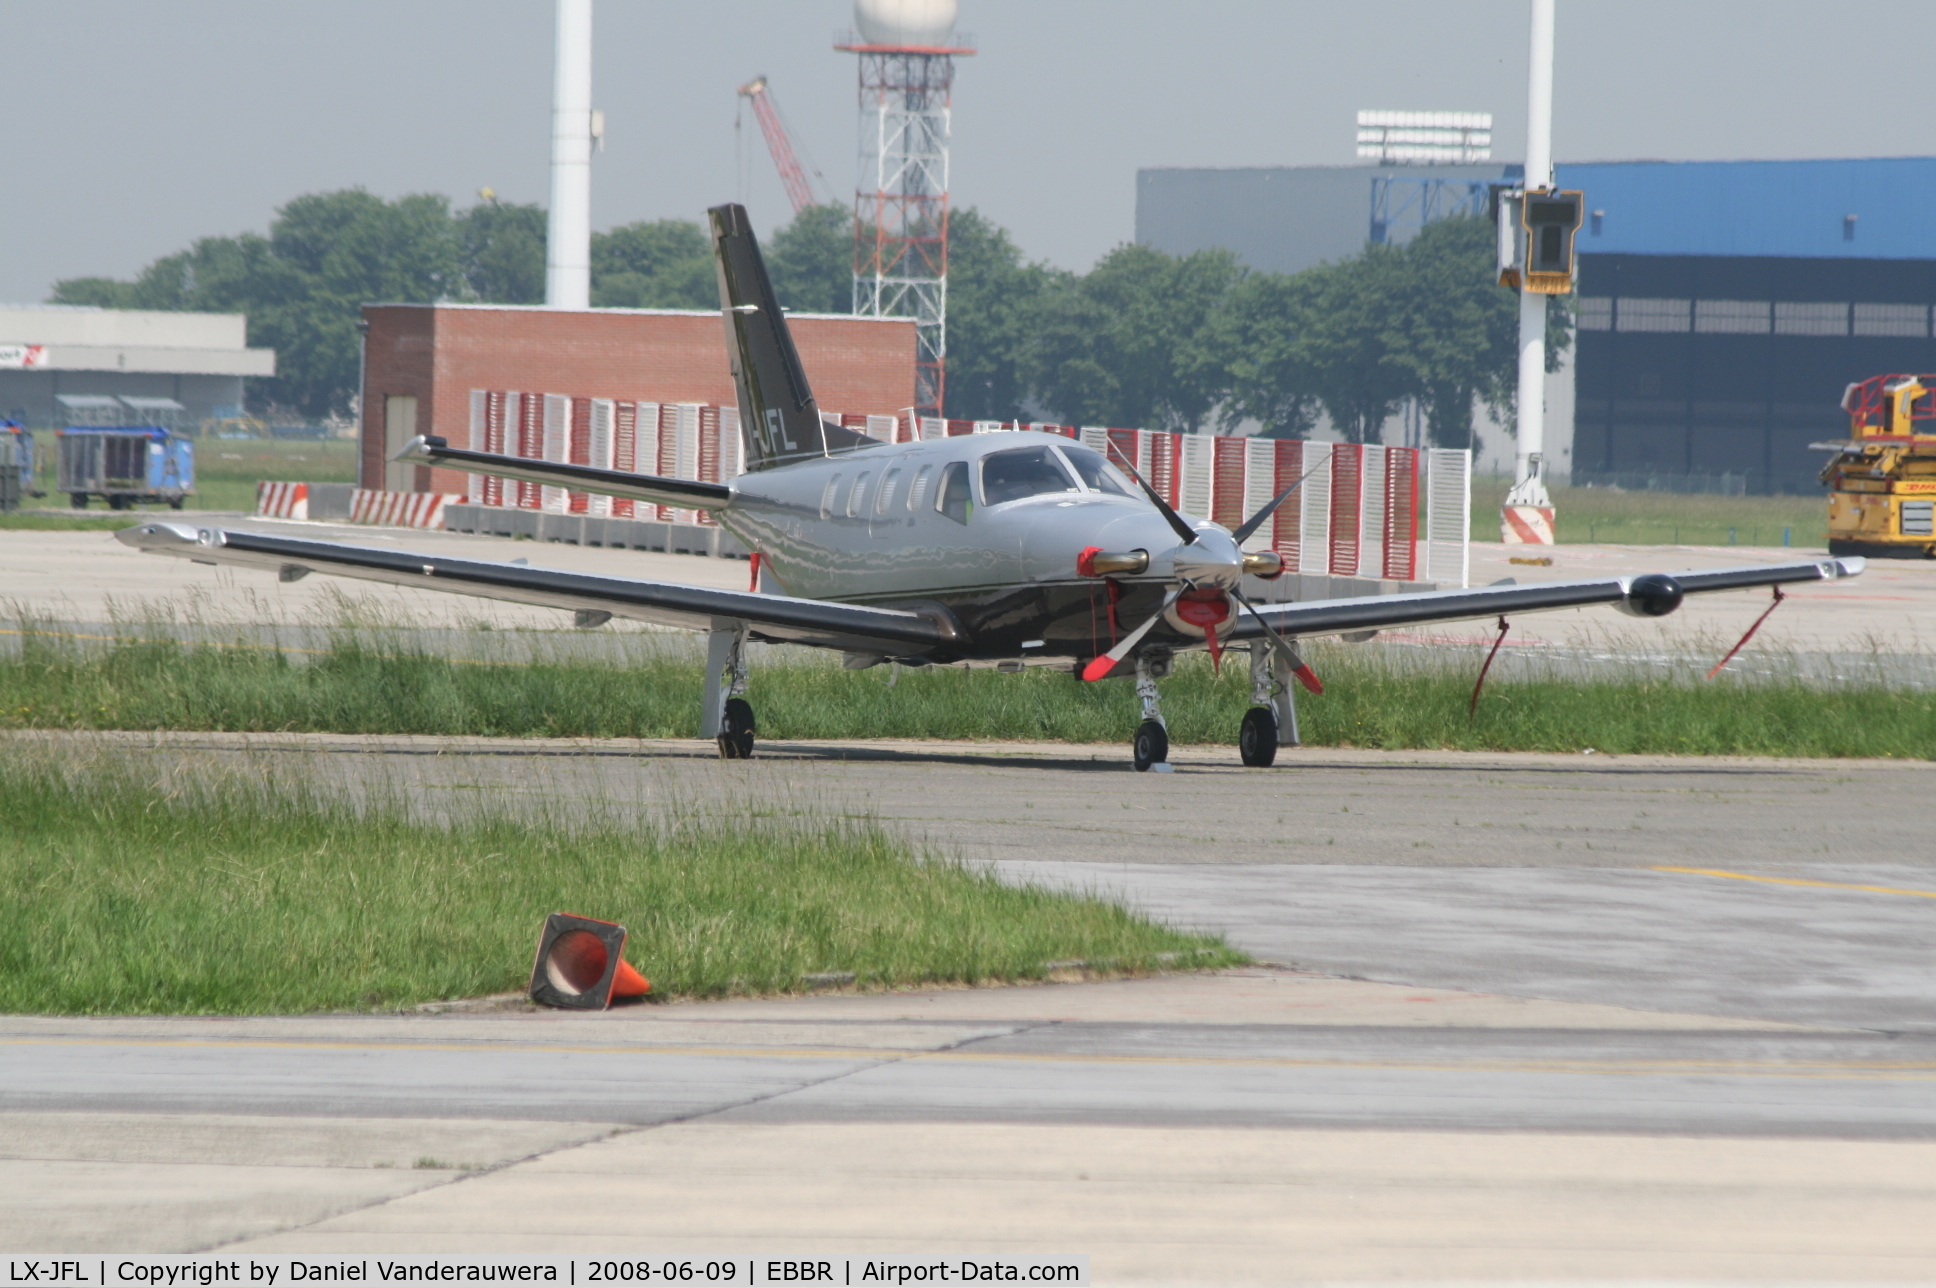 LX-JFL, 2007 Socata TBM-850 C/N 391, parked on General Aviation apron (Abelag)